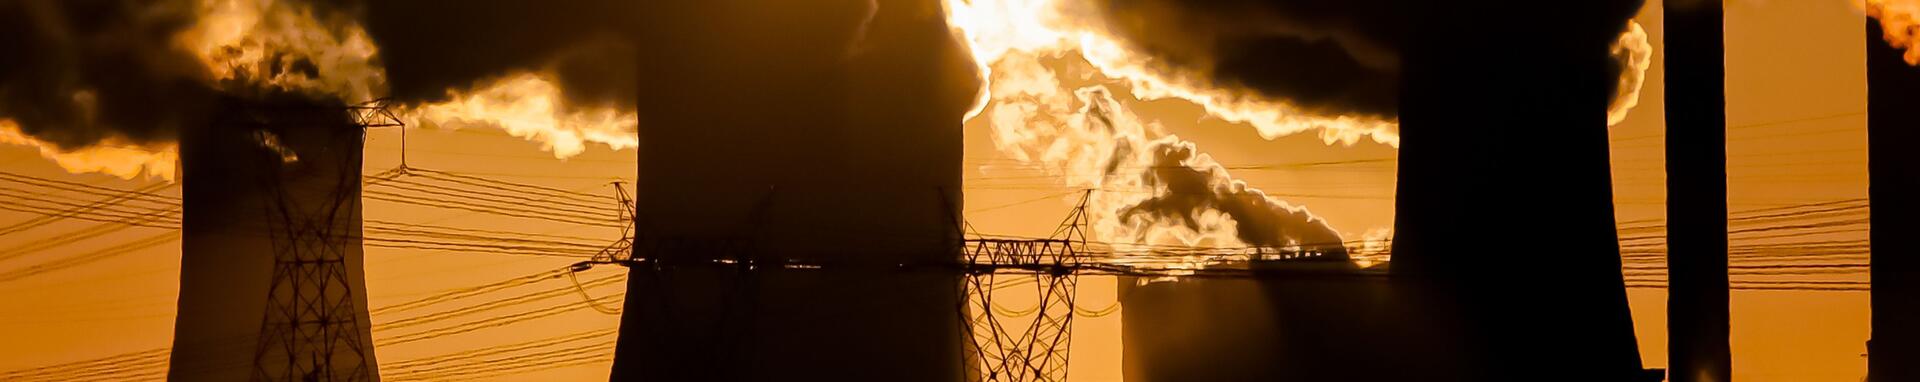 Coal power plant emits smoke against an orange sunset